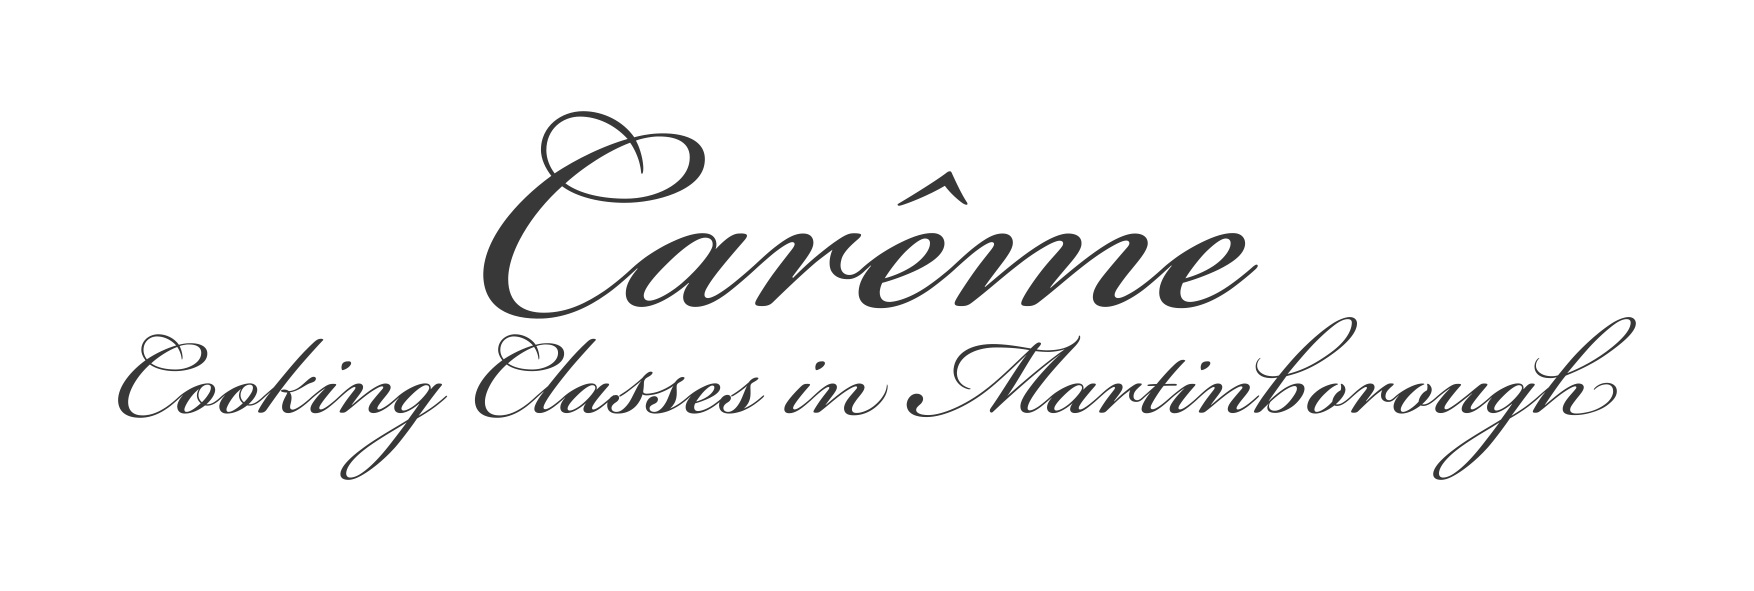 Careme Cooking Classes Logo